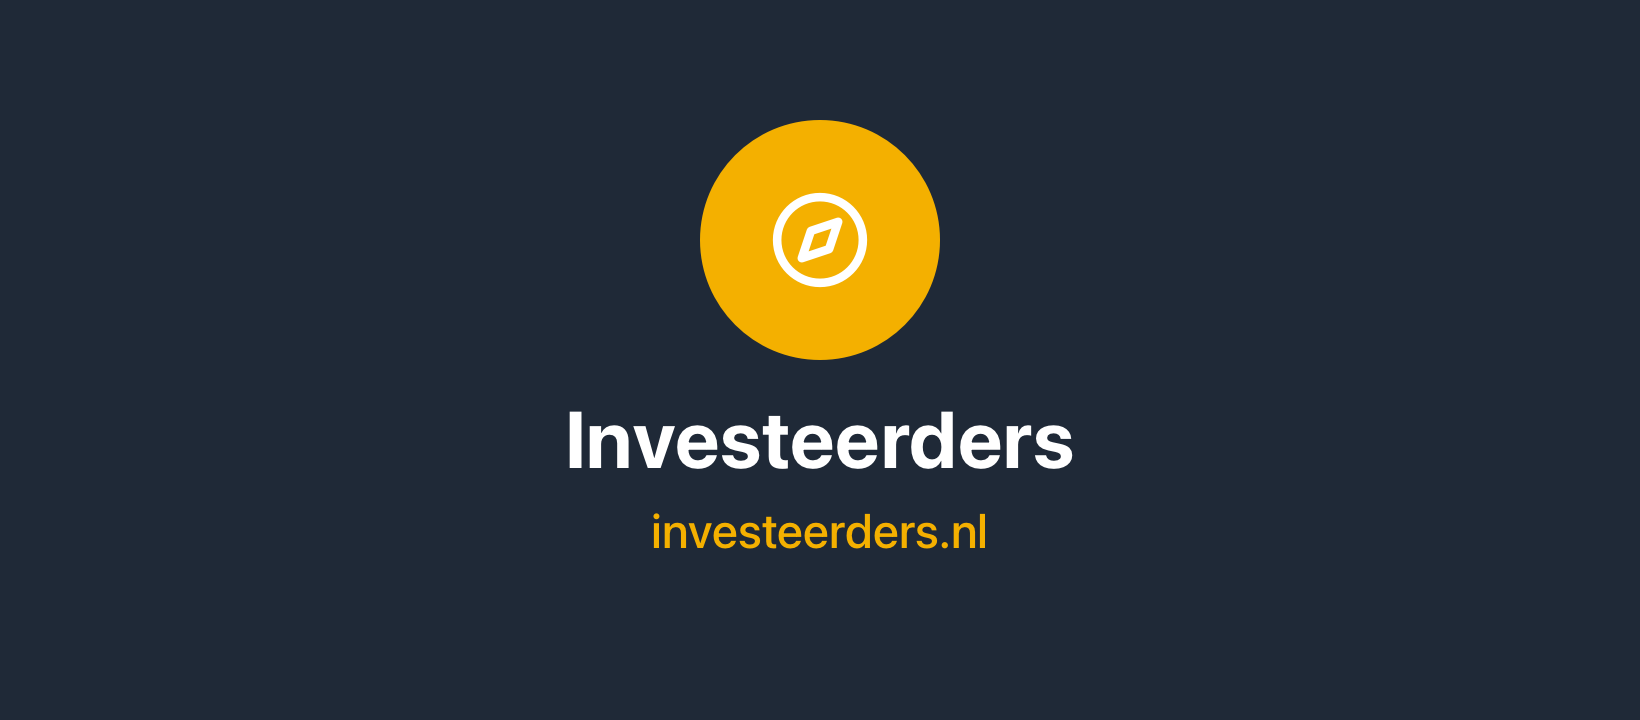 (c) Investeerders.nl